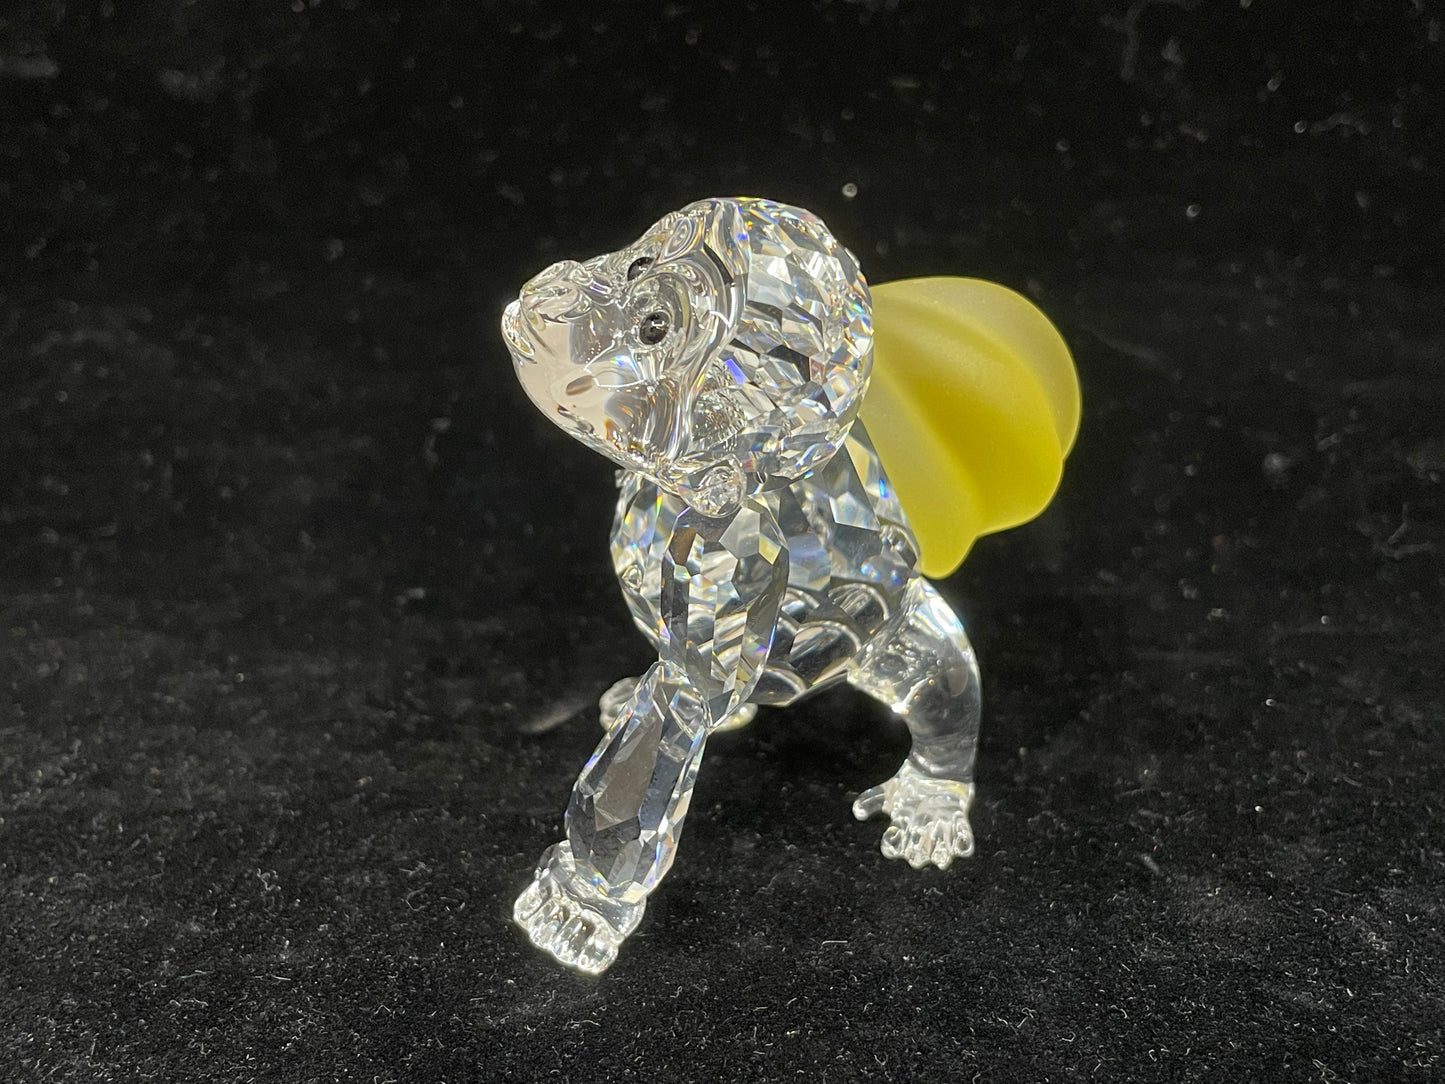 Swarovski "Young Gorilla with Bananas" Crystal Figurine